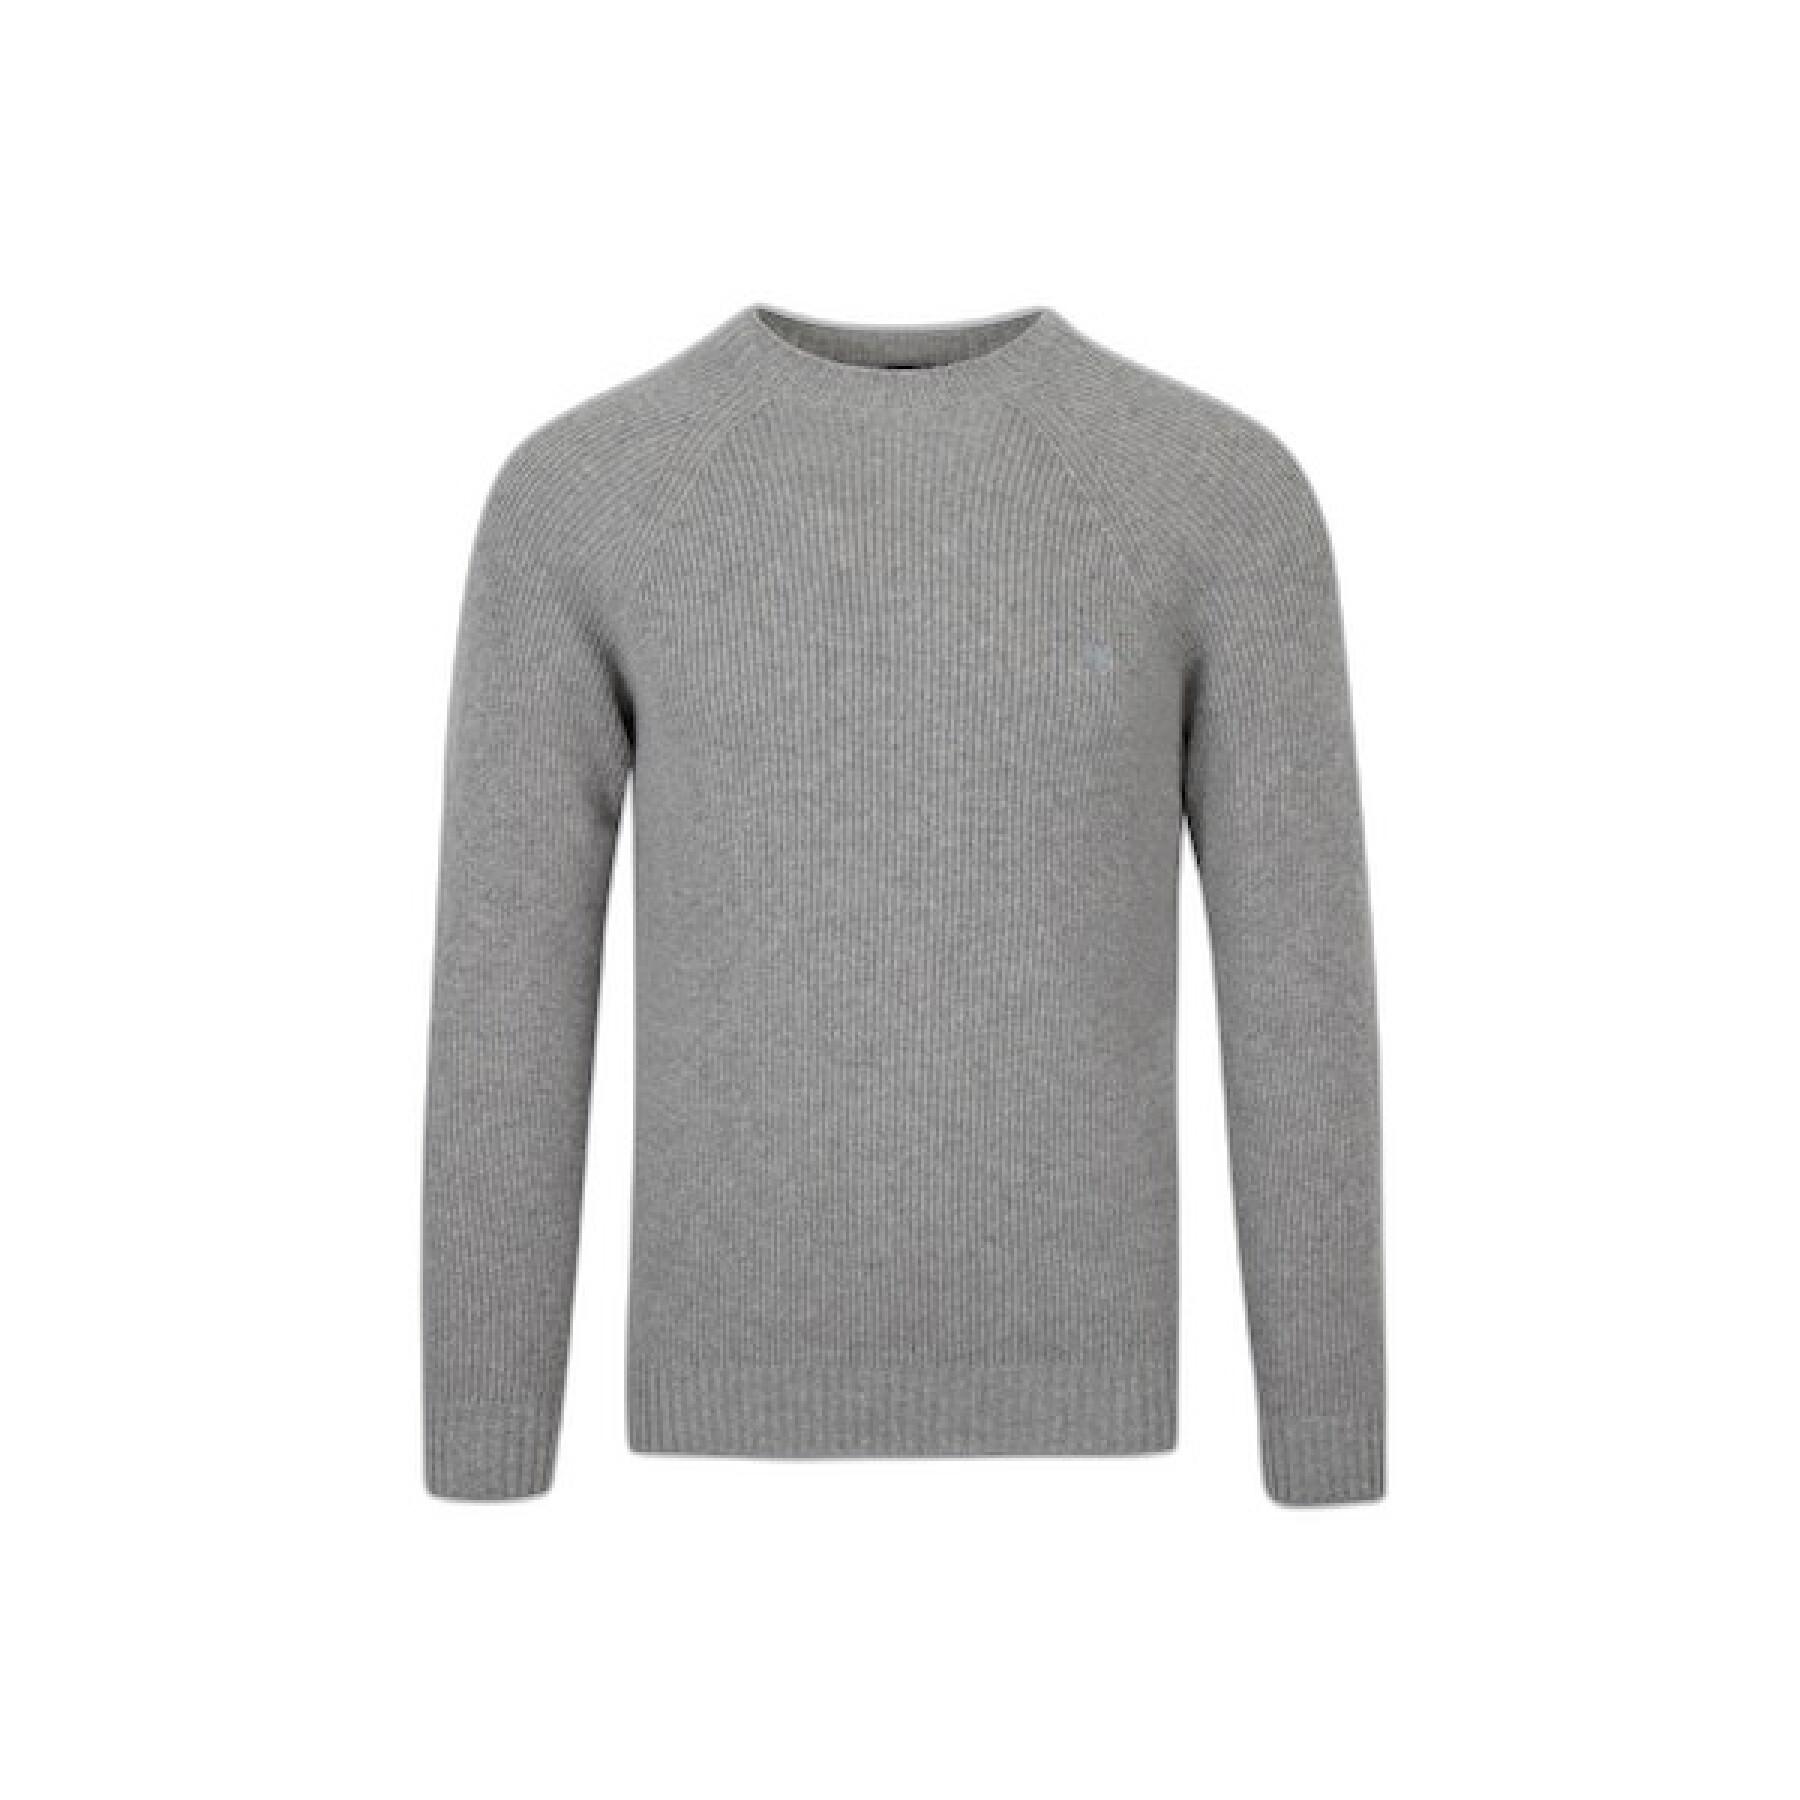 Wełniany sweter Faguo Frehel